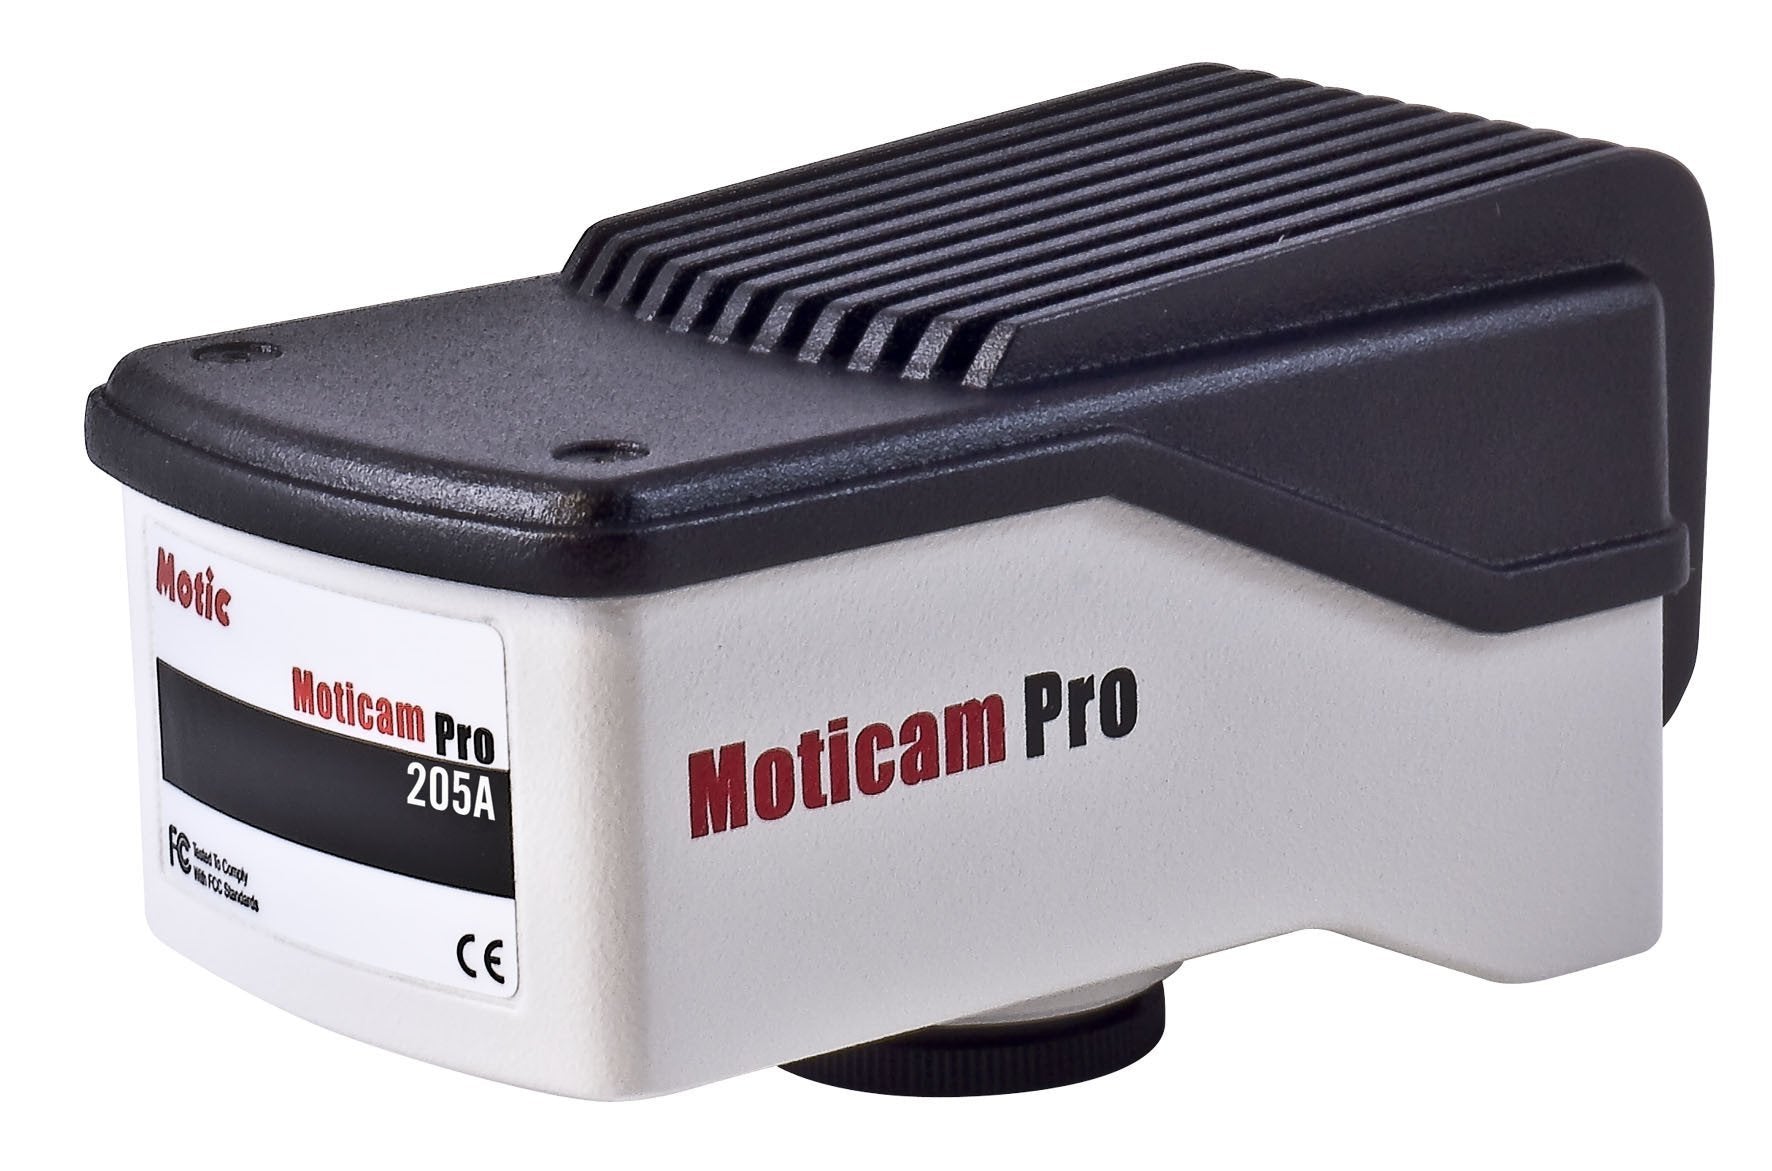 Moticam Pro 205B Microscope Camera